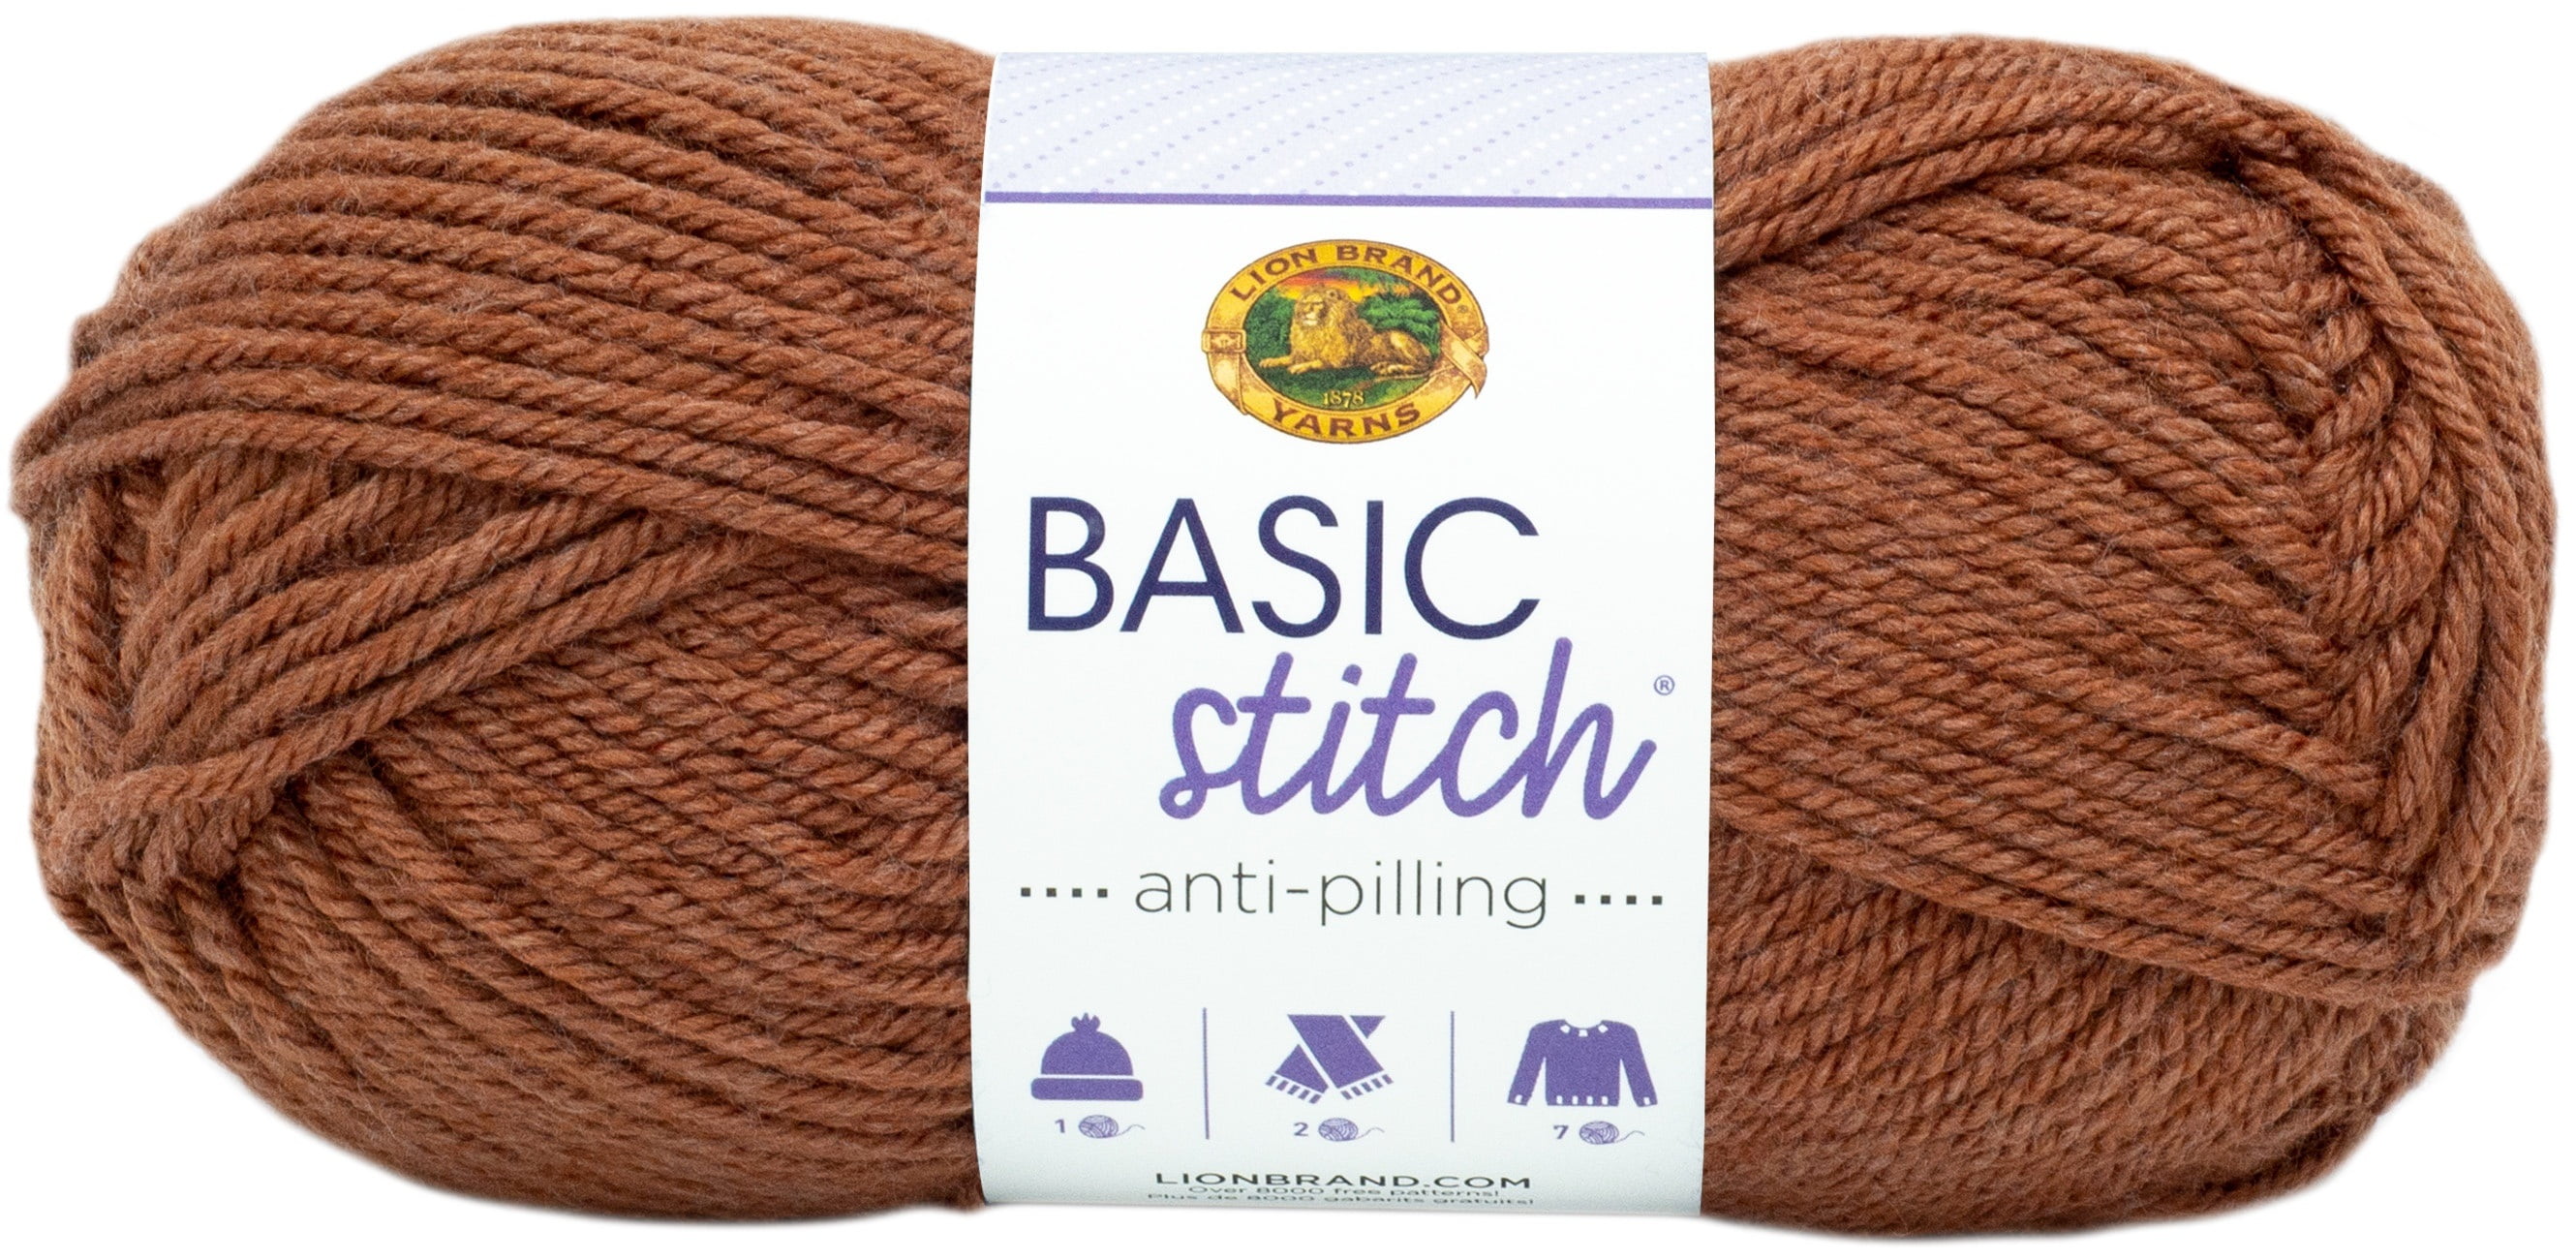 Lion Brand Basic Stitch Anti-Pilling Yarn Review - Magic Owl Studios